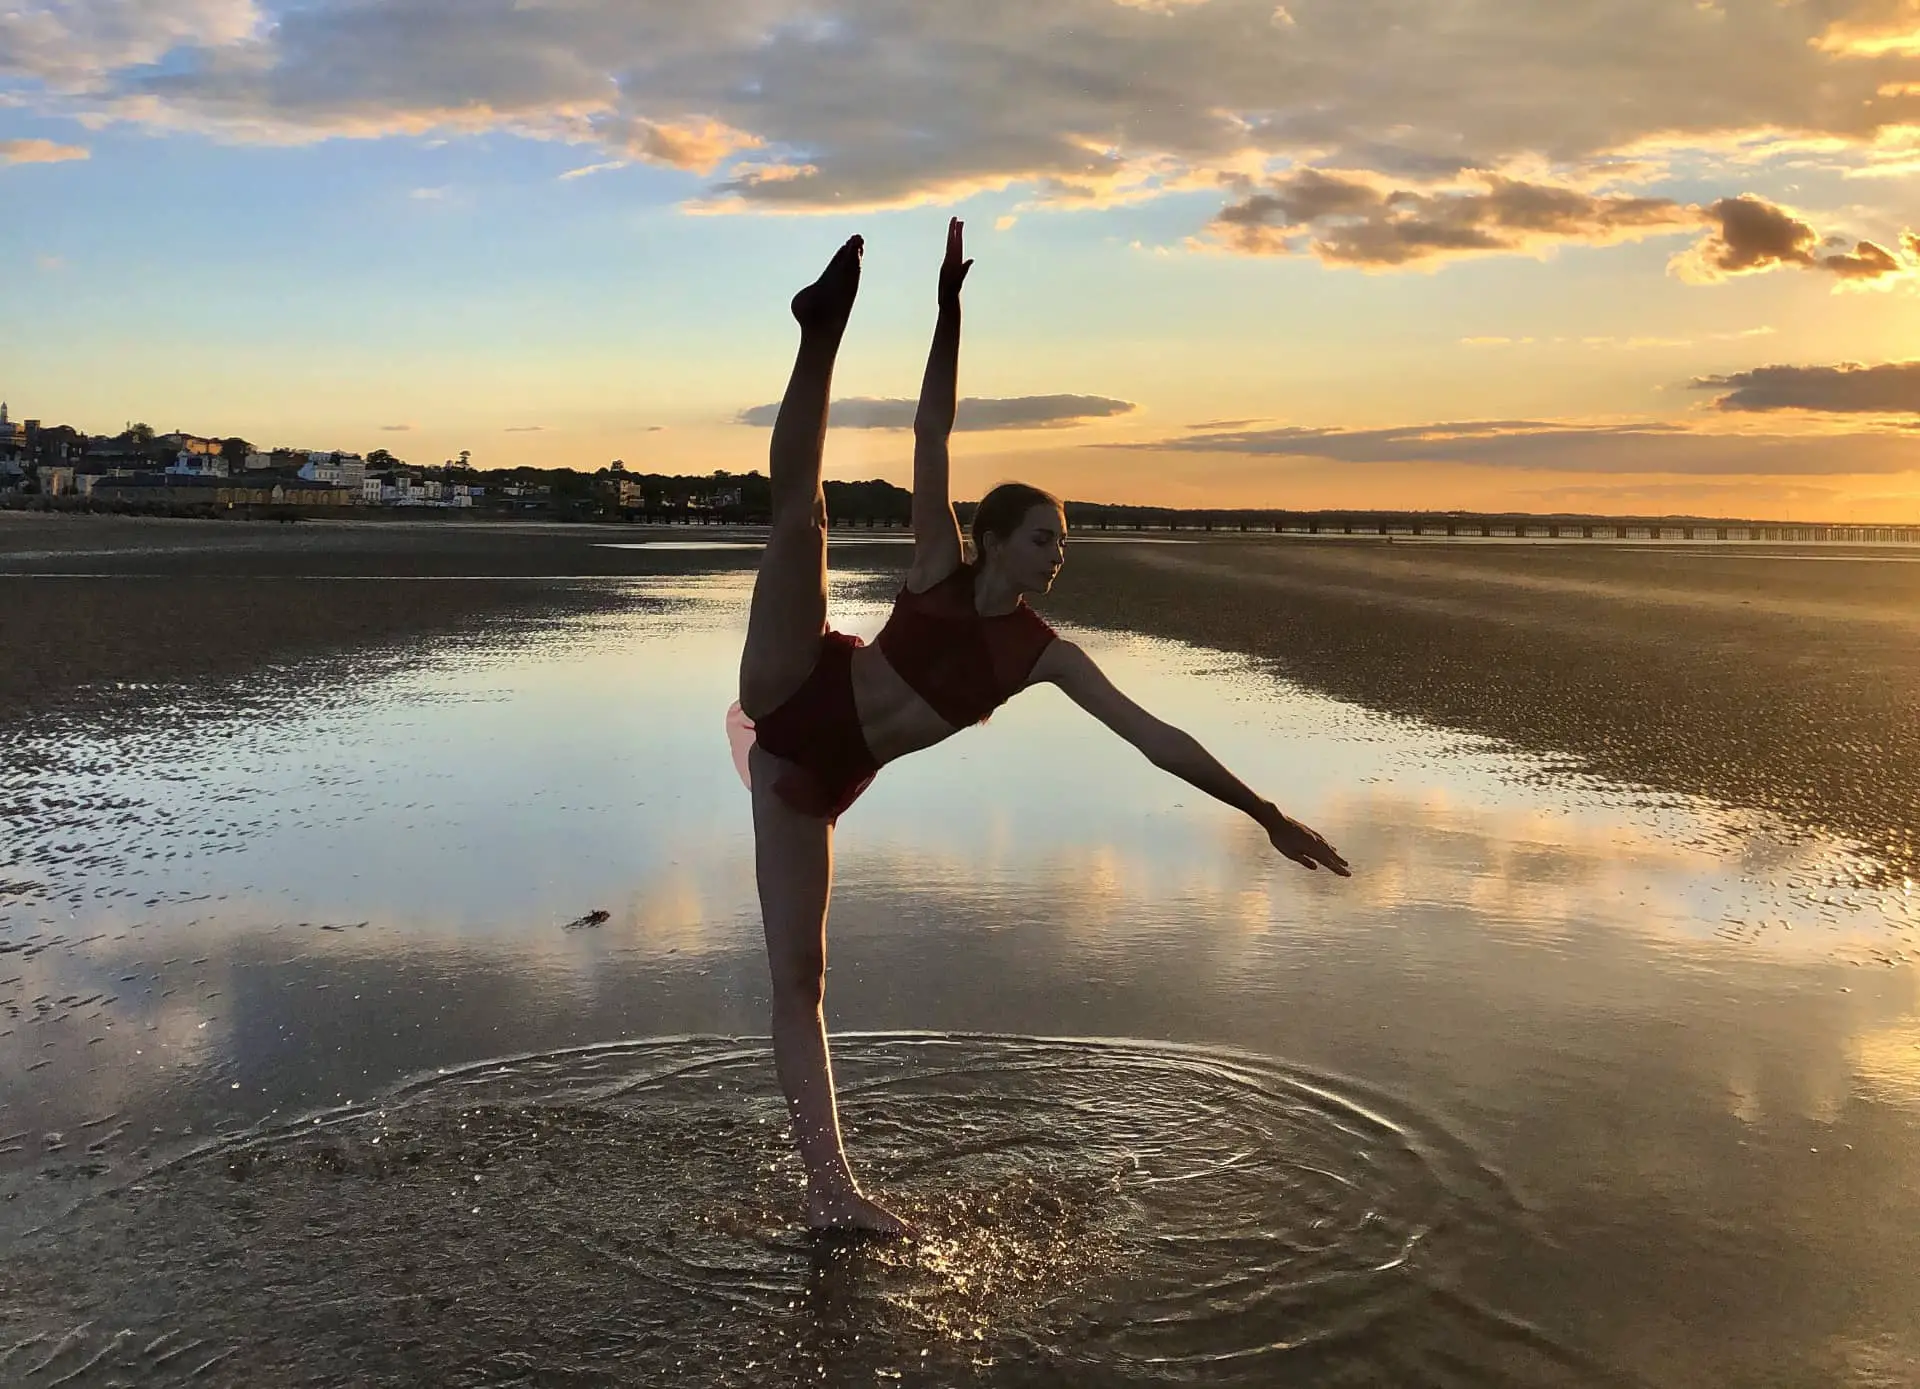 Ryde Academy Dance Team member posing for photo on beach